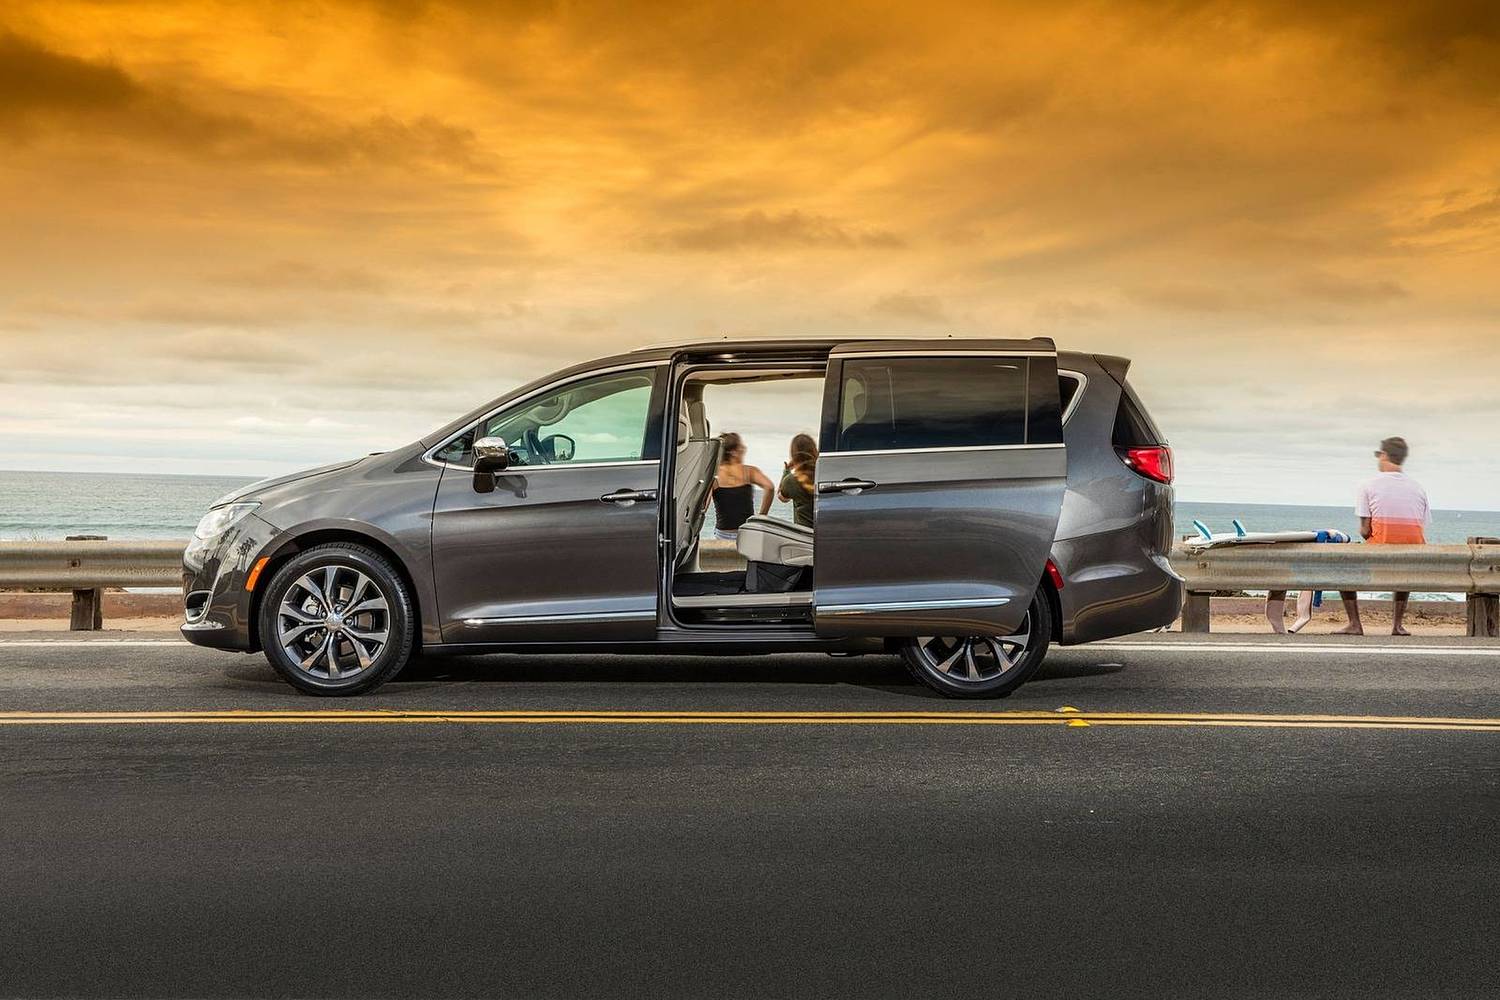 2018 Chrysler Pacifica Limited Passenger Minivan Lifestyle Exterior Shown